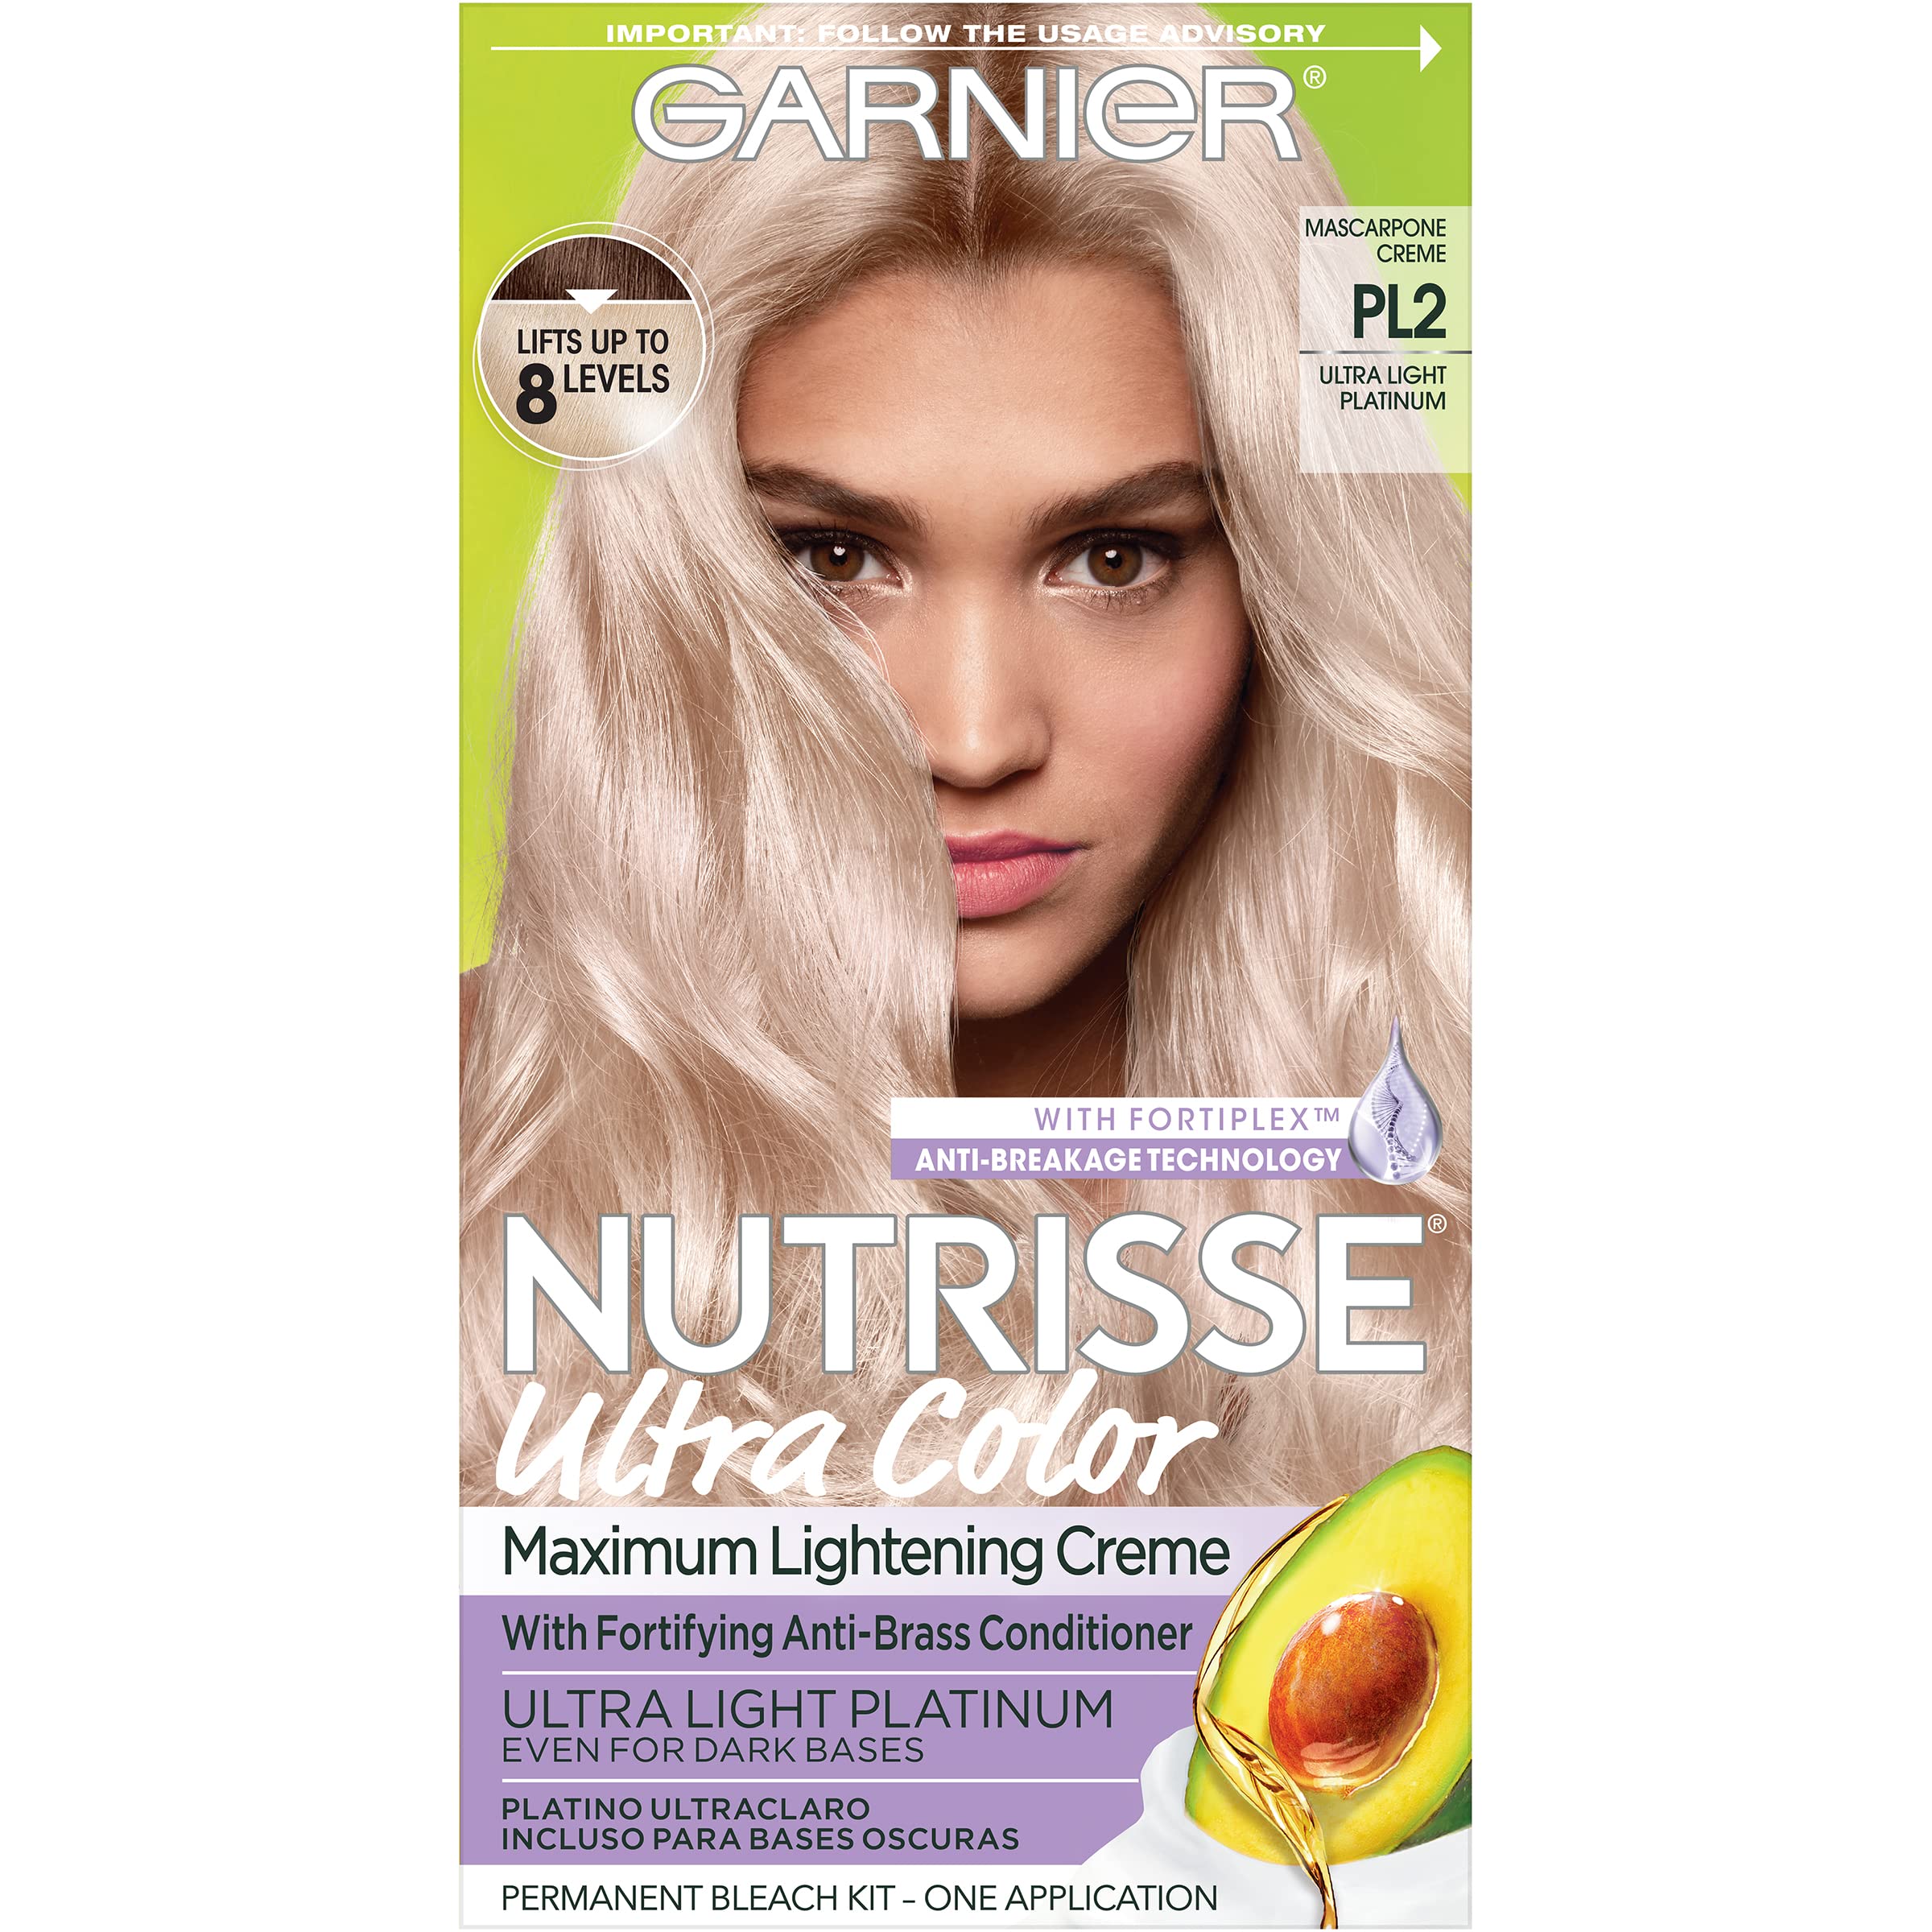 Garnier Hair Color Nutrisse Ultra Color Nourishing Hair Color Creme, Mascarpone Creme Pl2, 1 Count